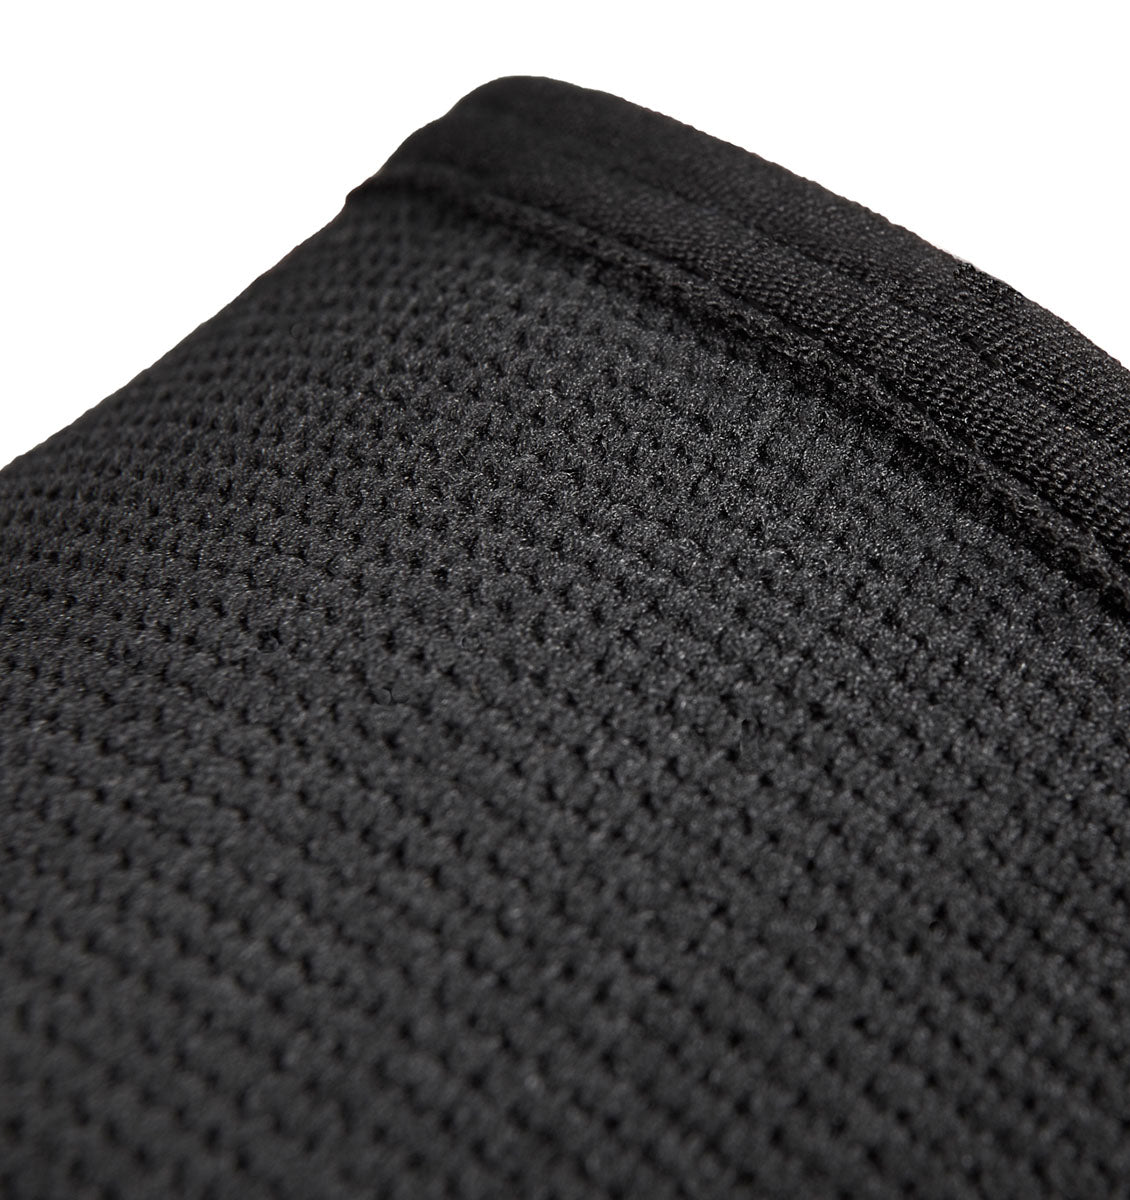 adidas Essential Wrist Support/Sleeve - Black - 4